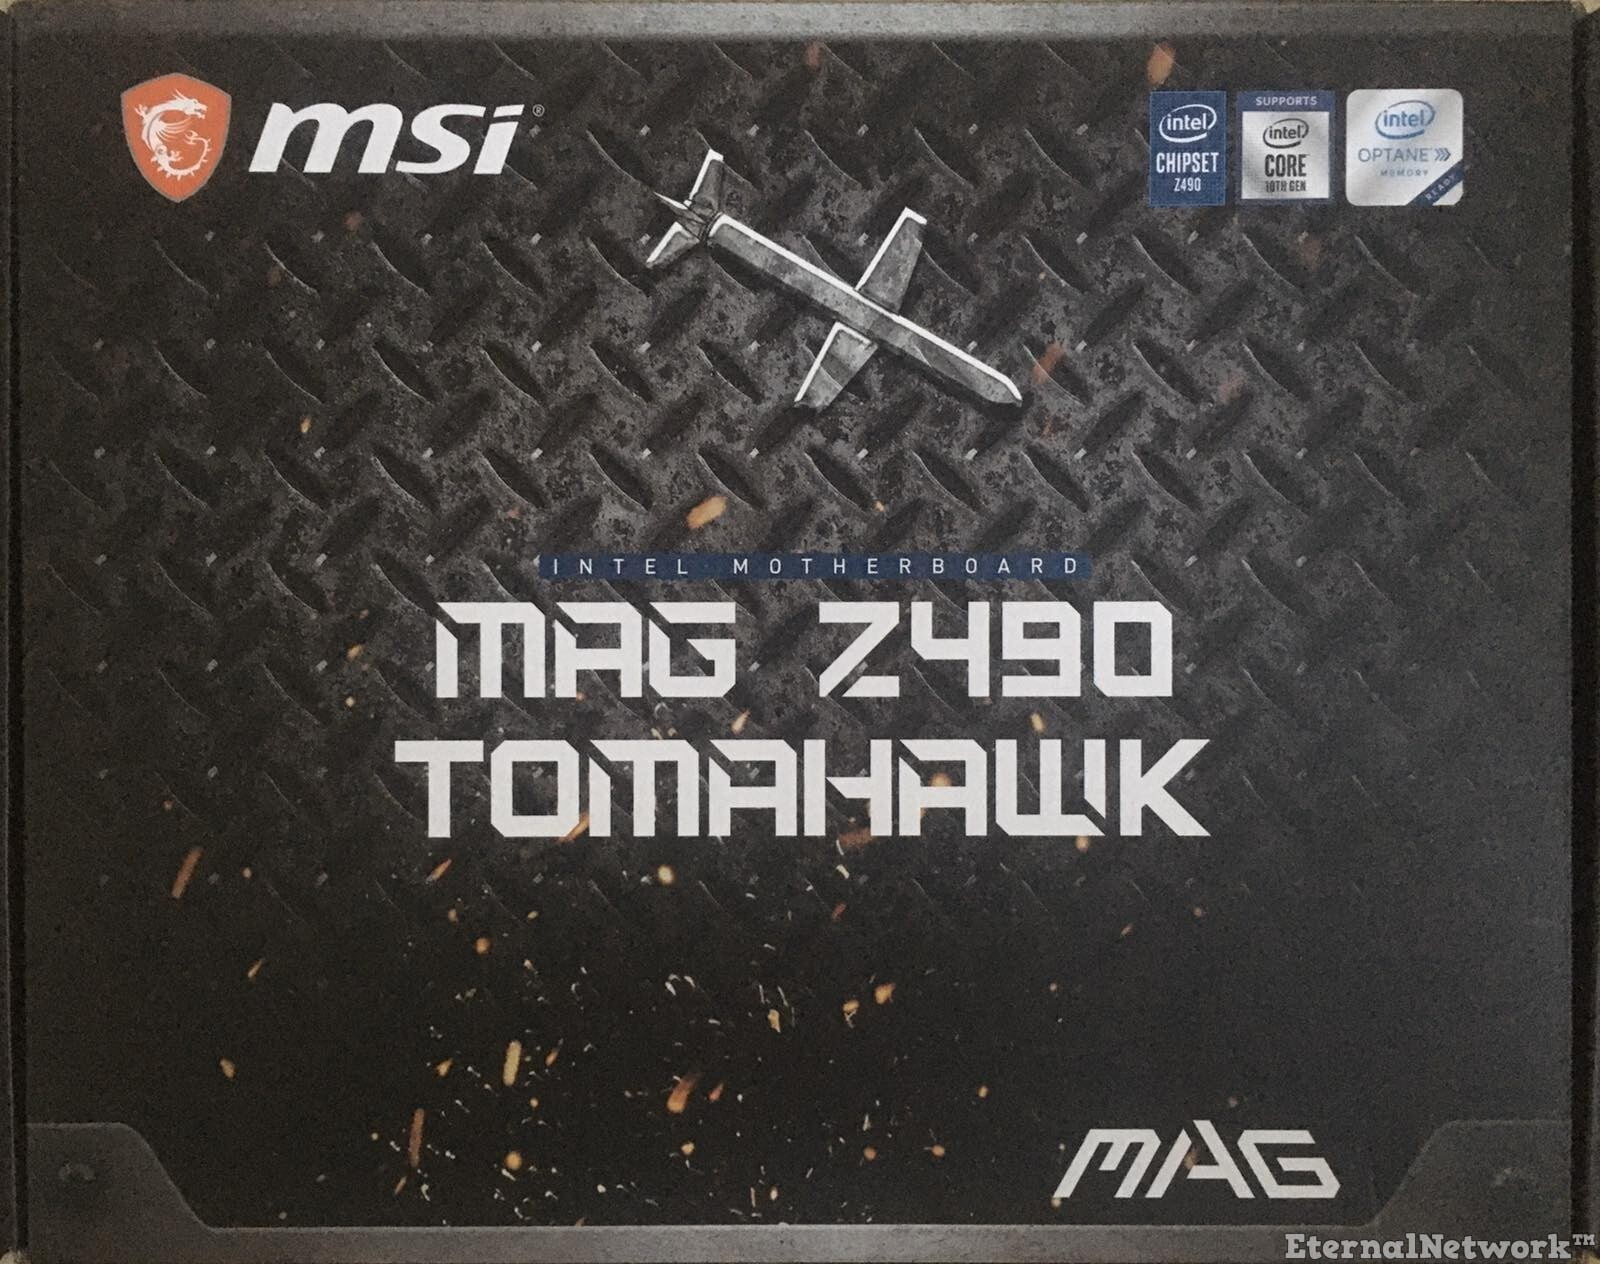 MSI MAG Z490 Tomahawk Motherboard Review | EternalNetwork™